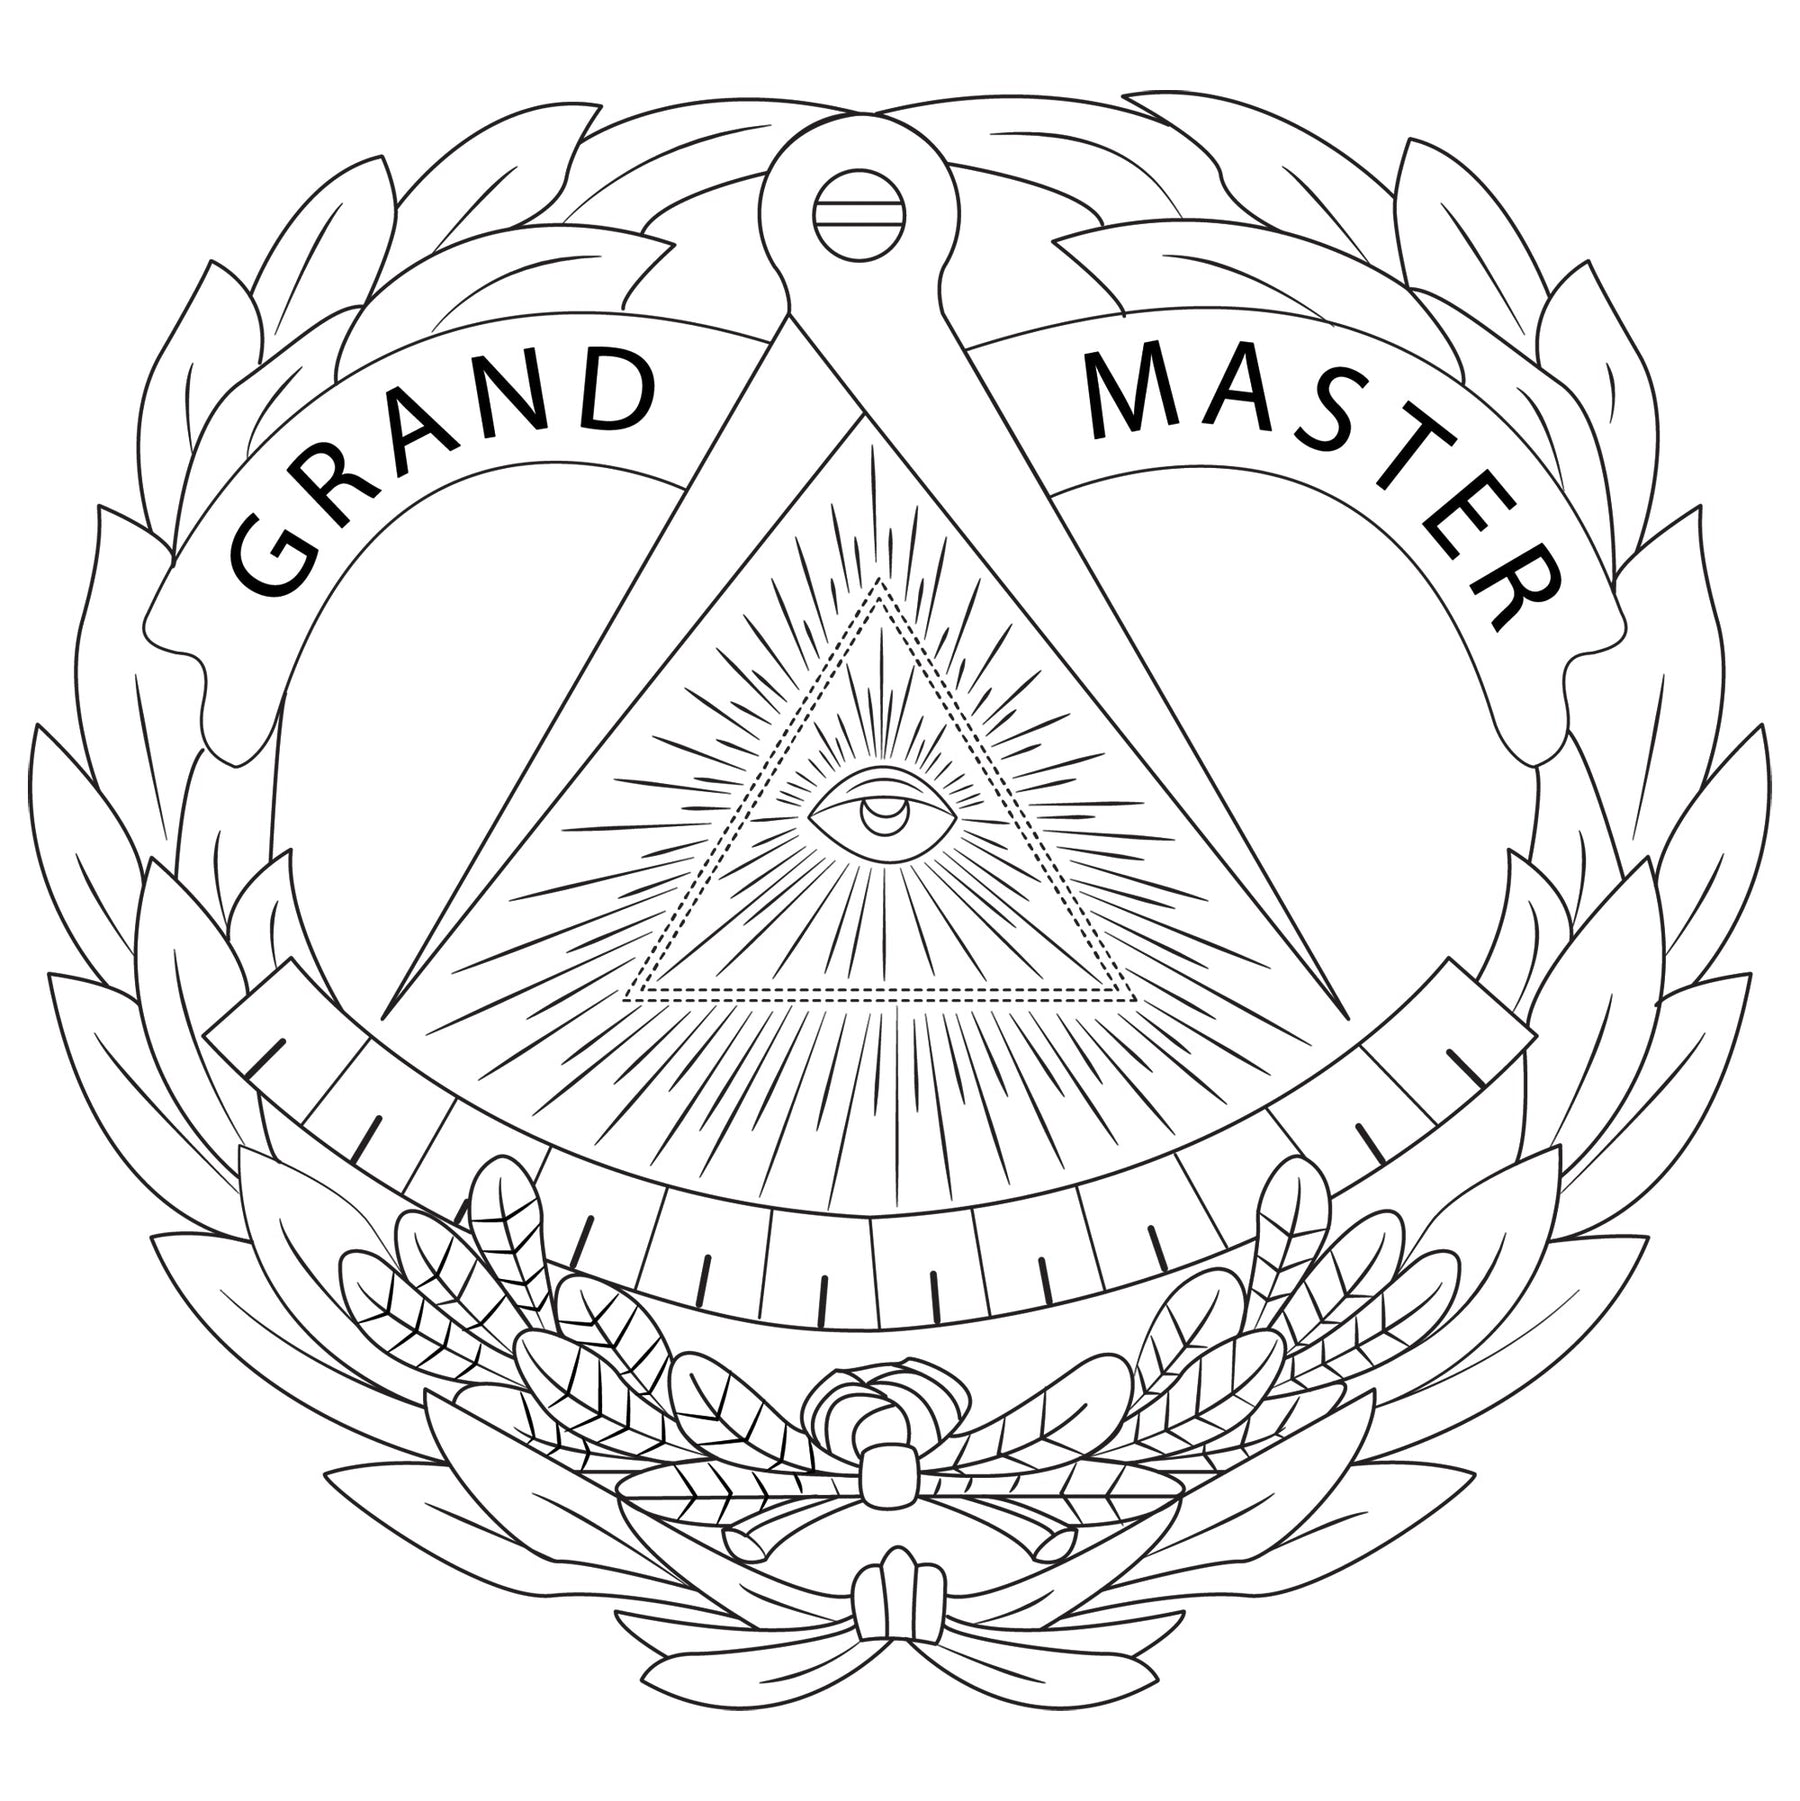 Grand Master Blue Lodge Watch Case - (8 Slots) - Bricks Masons